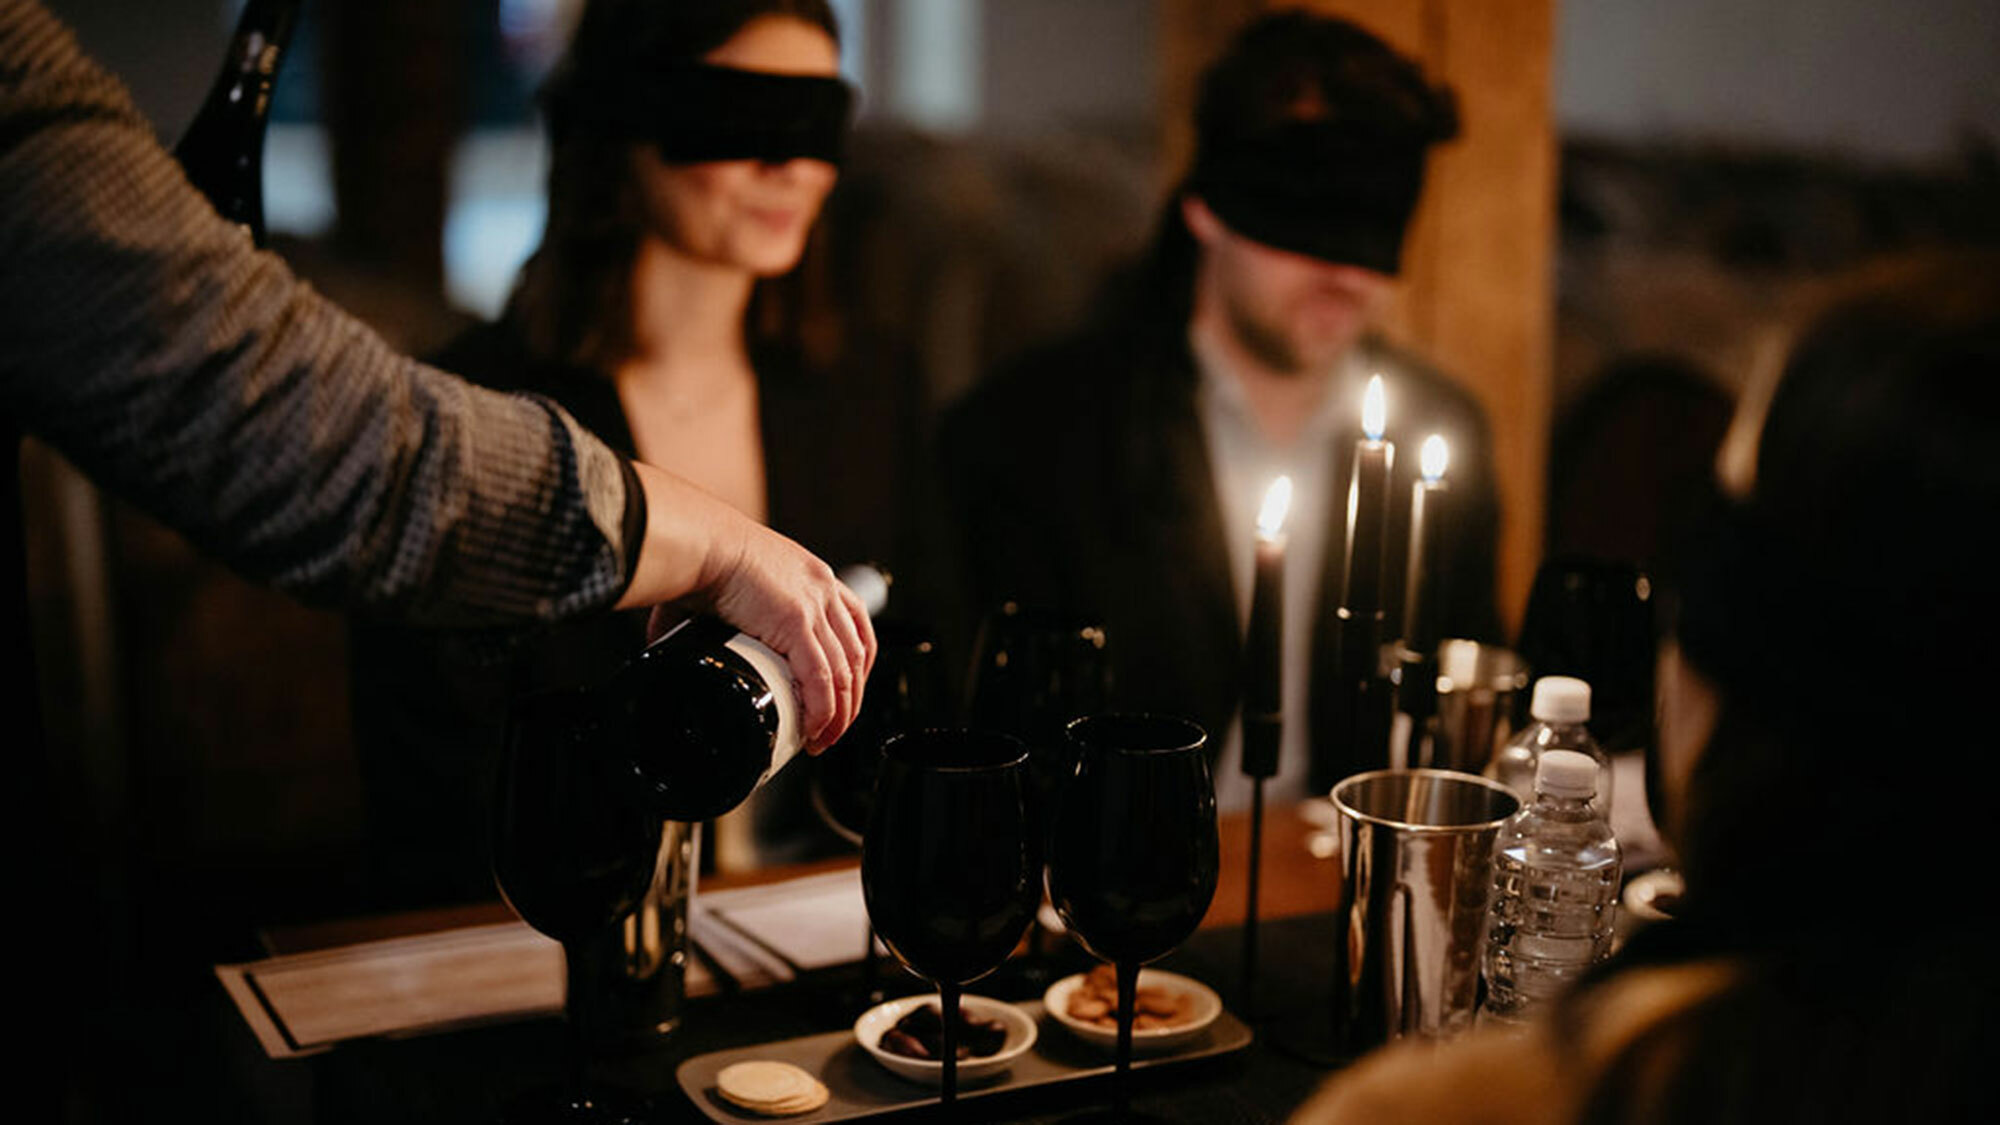 Hardys Wine Tasting in the Dark: A Wine Sensory Experience